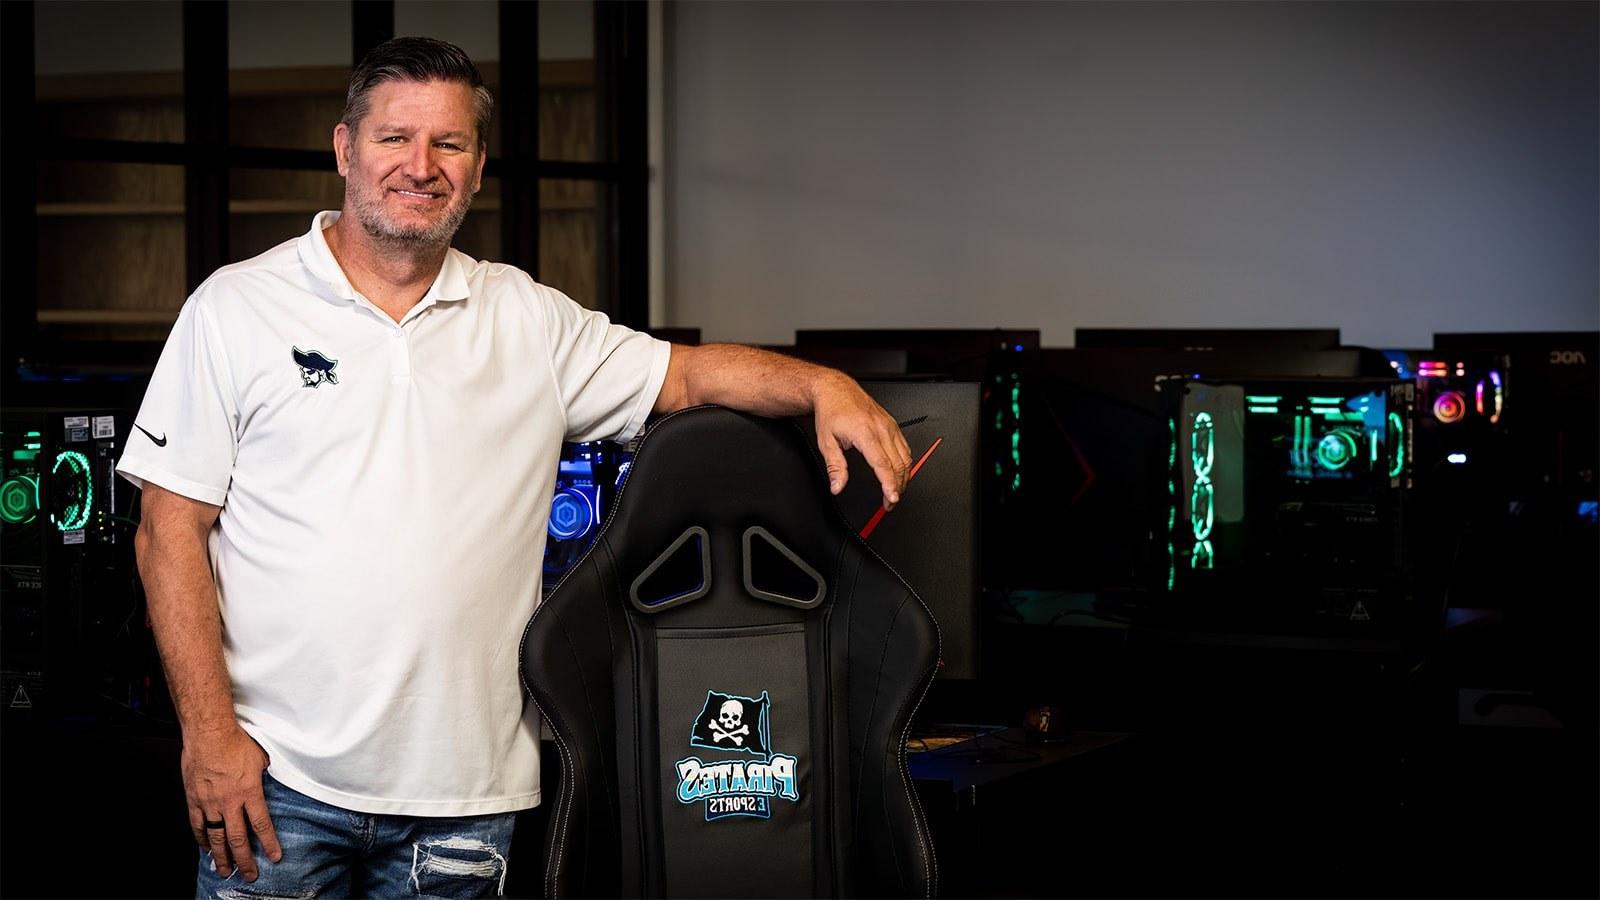 Scott Brumfield站在游戏电脑前. 他坐在PSC海盗队的游戏椅旁边，穿着海盗队的球衣.